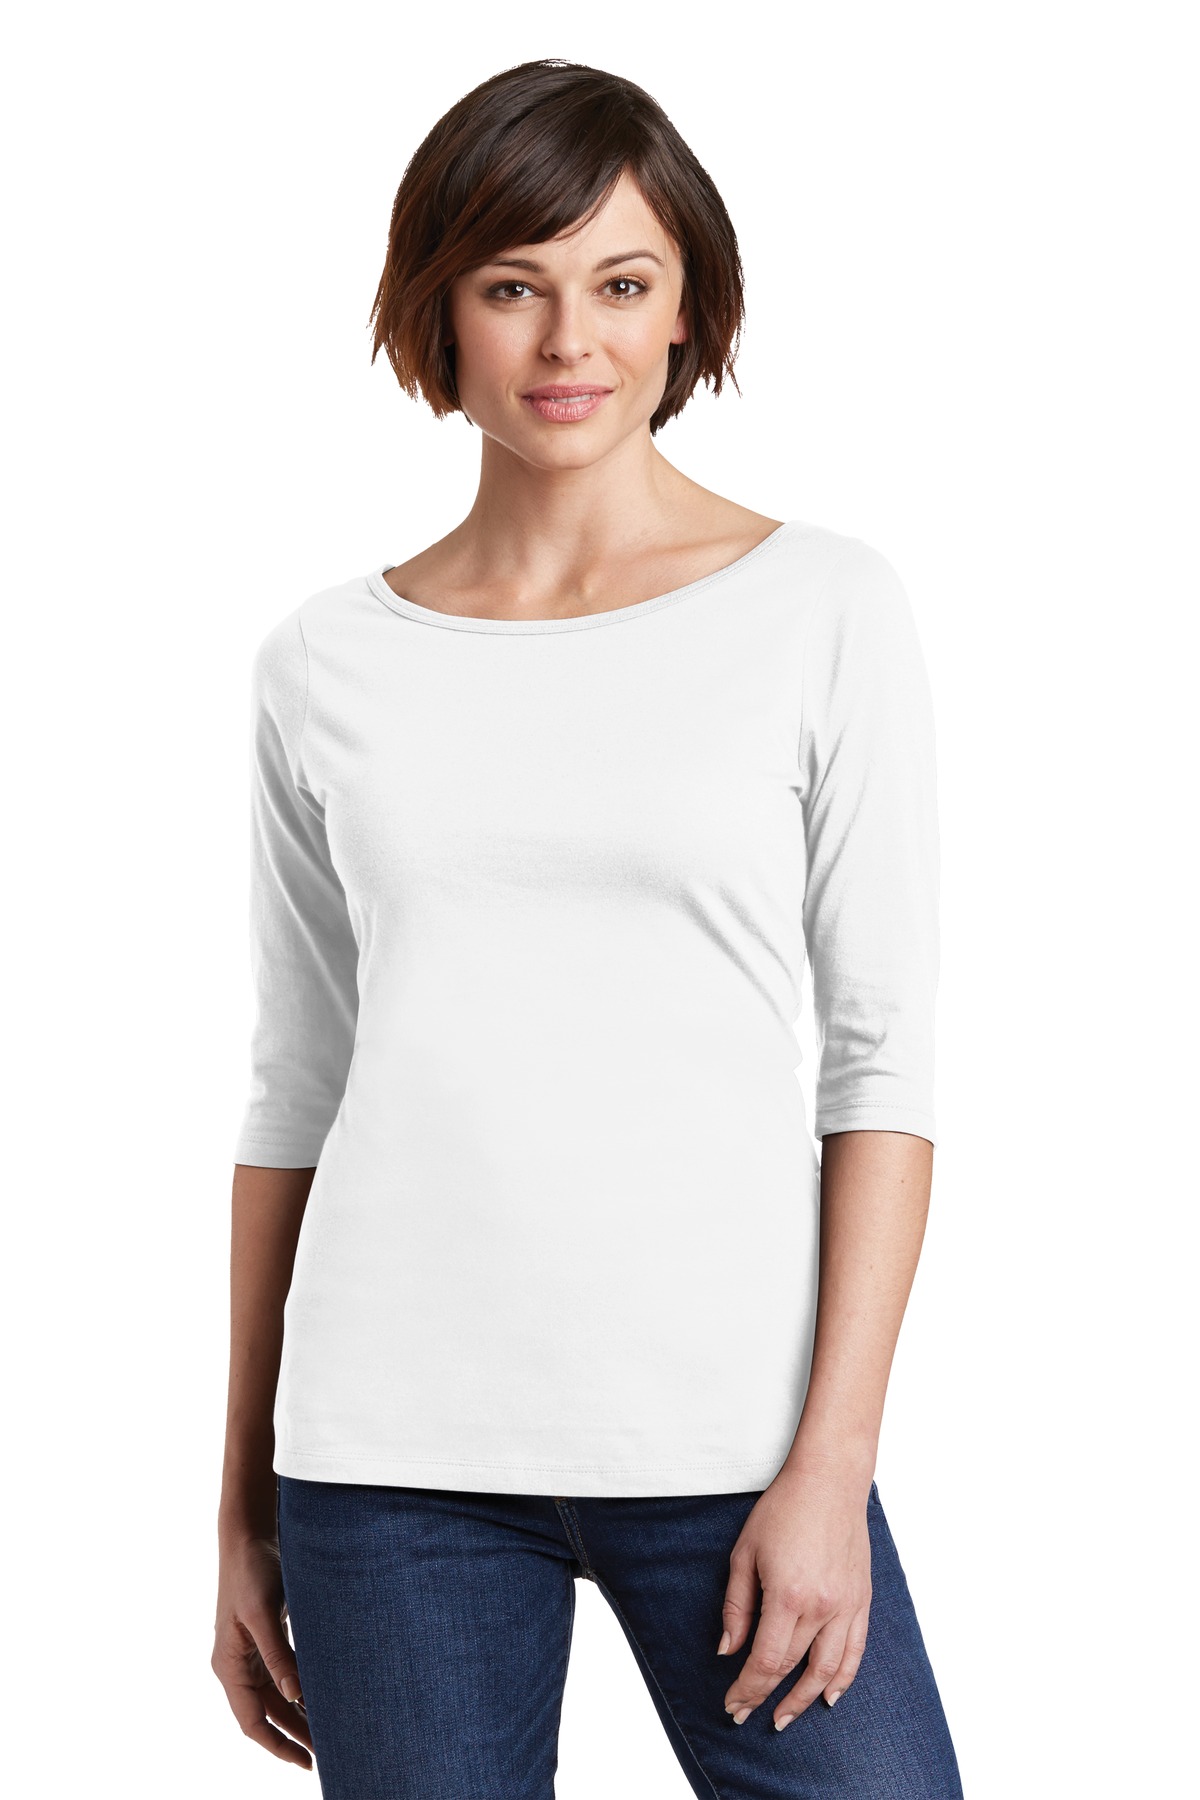 kone Hæl Vibrere District ® Women's Perfect Weight ® 3/4-Sleeve Tee. DM107L - Custom Shirt  Shop